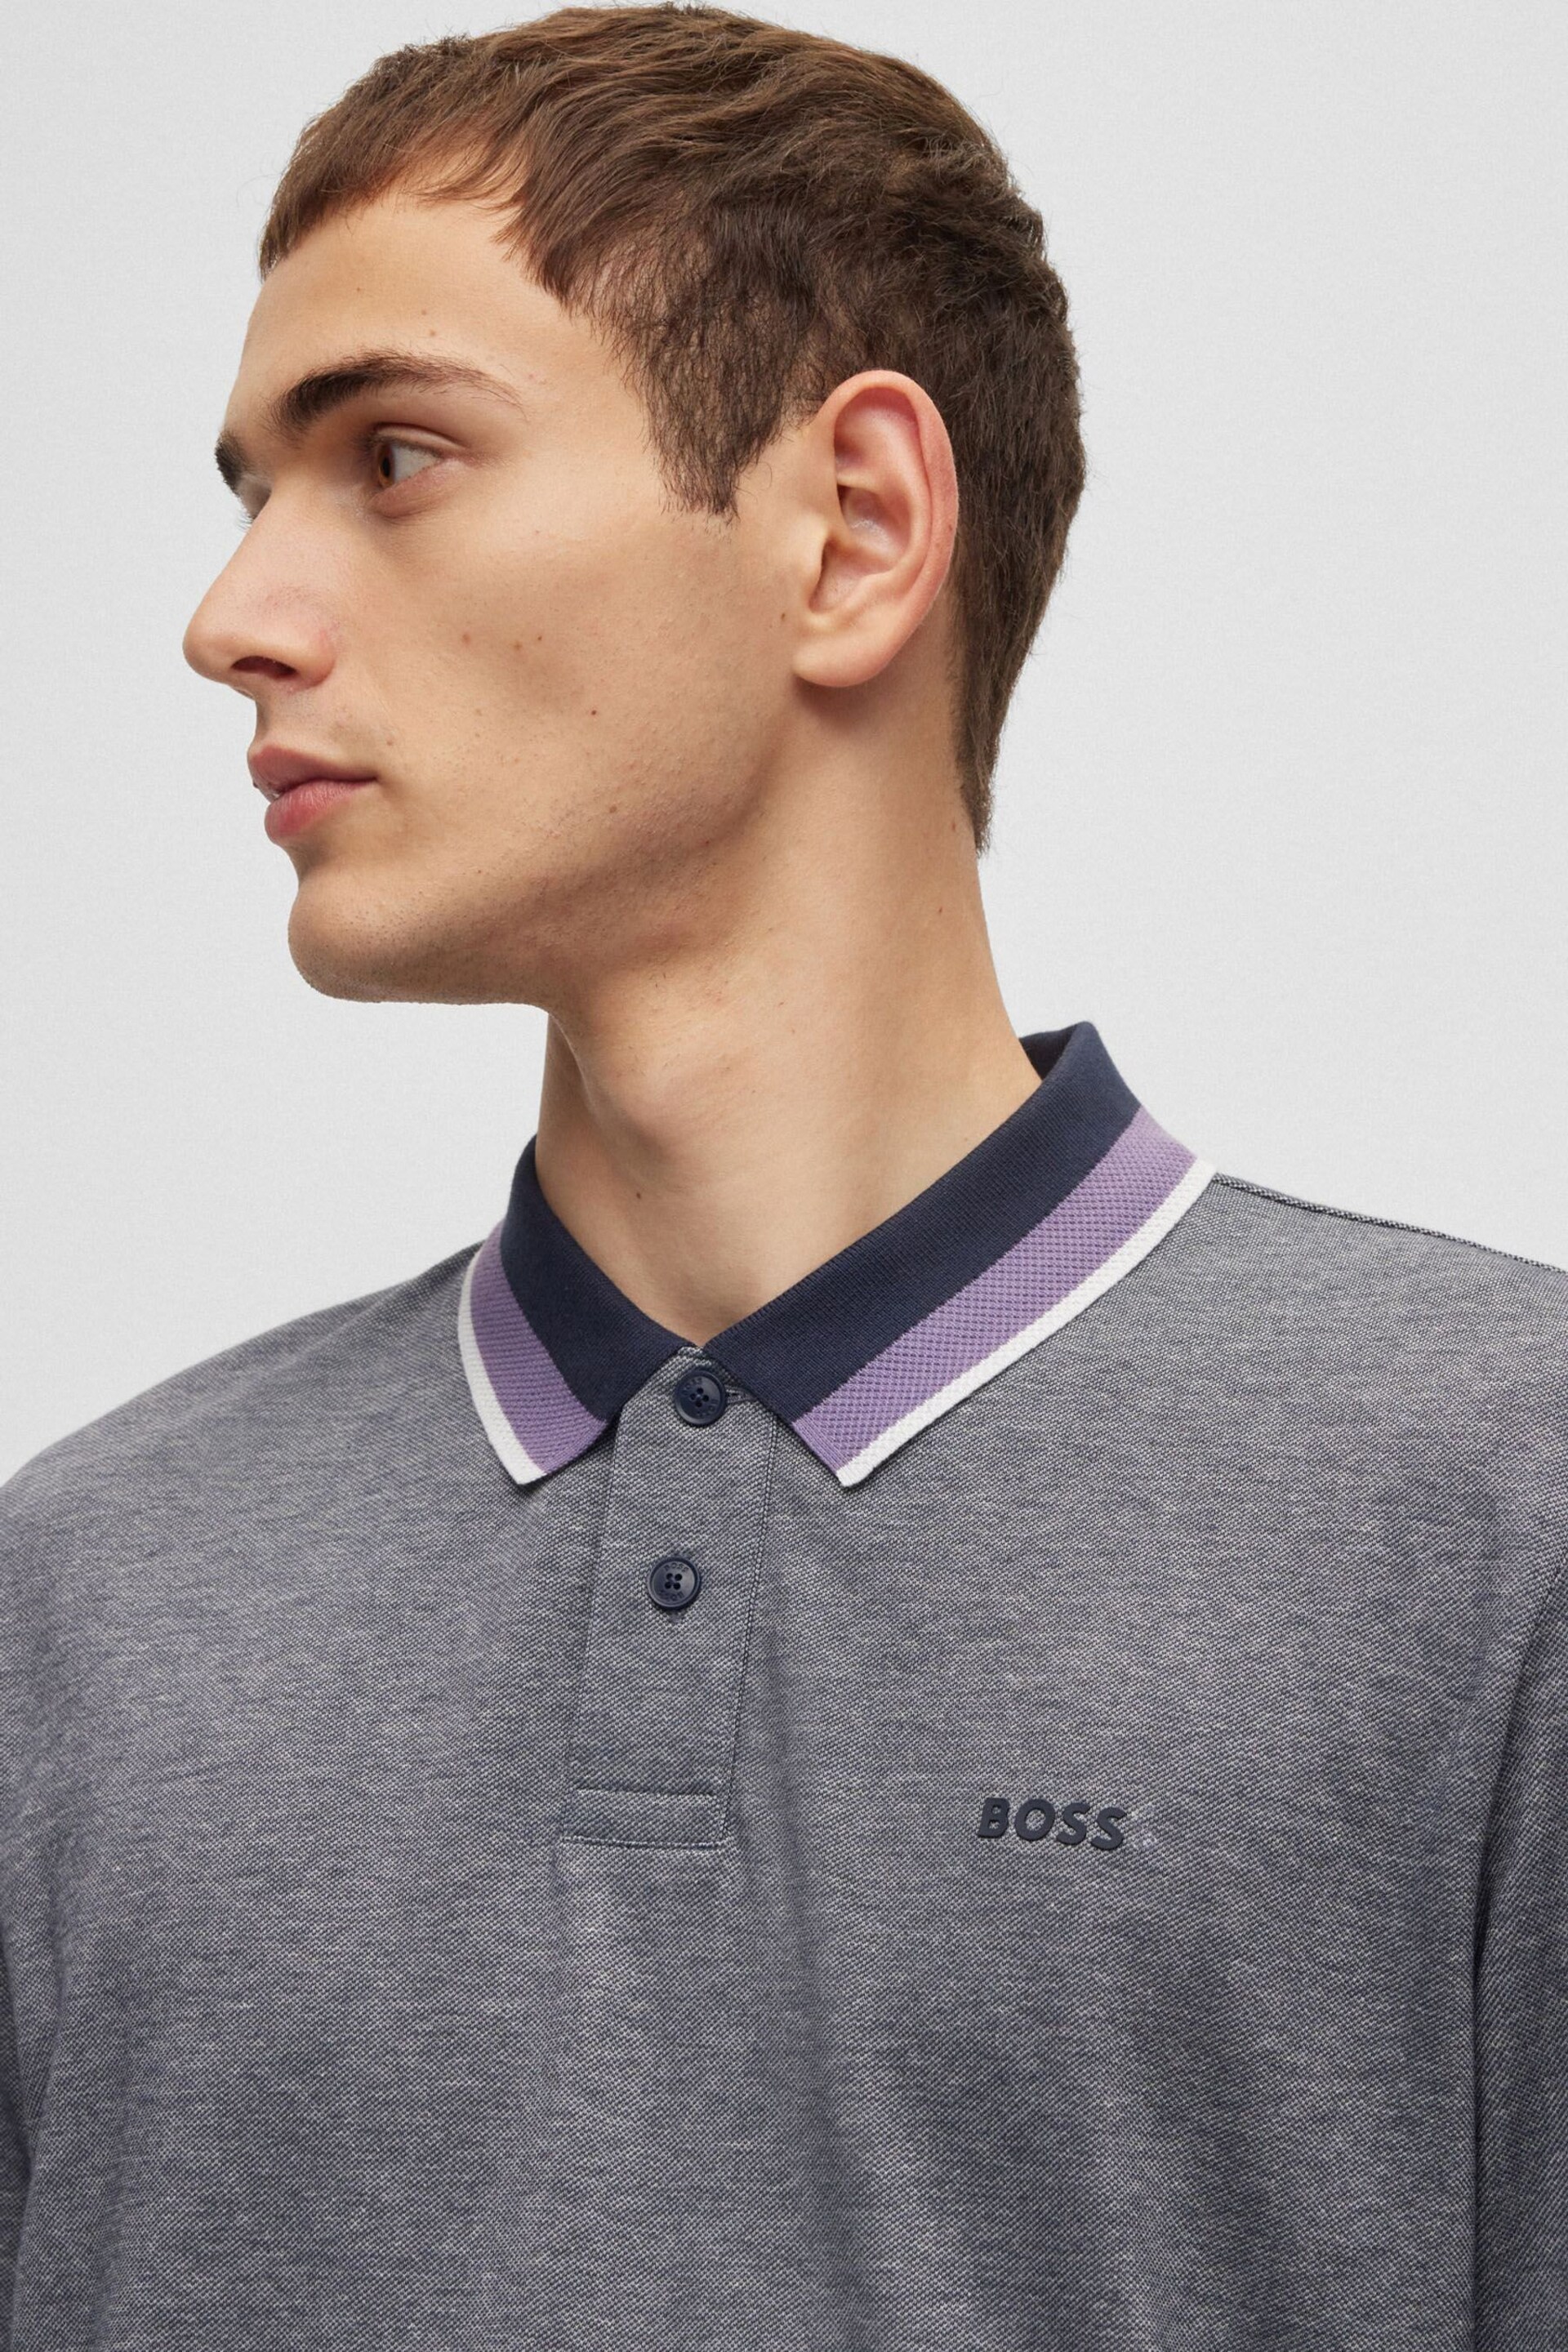 BOSS Grey Oxford Pique Long Sleeve Polo Shirt - Image 4 of 5